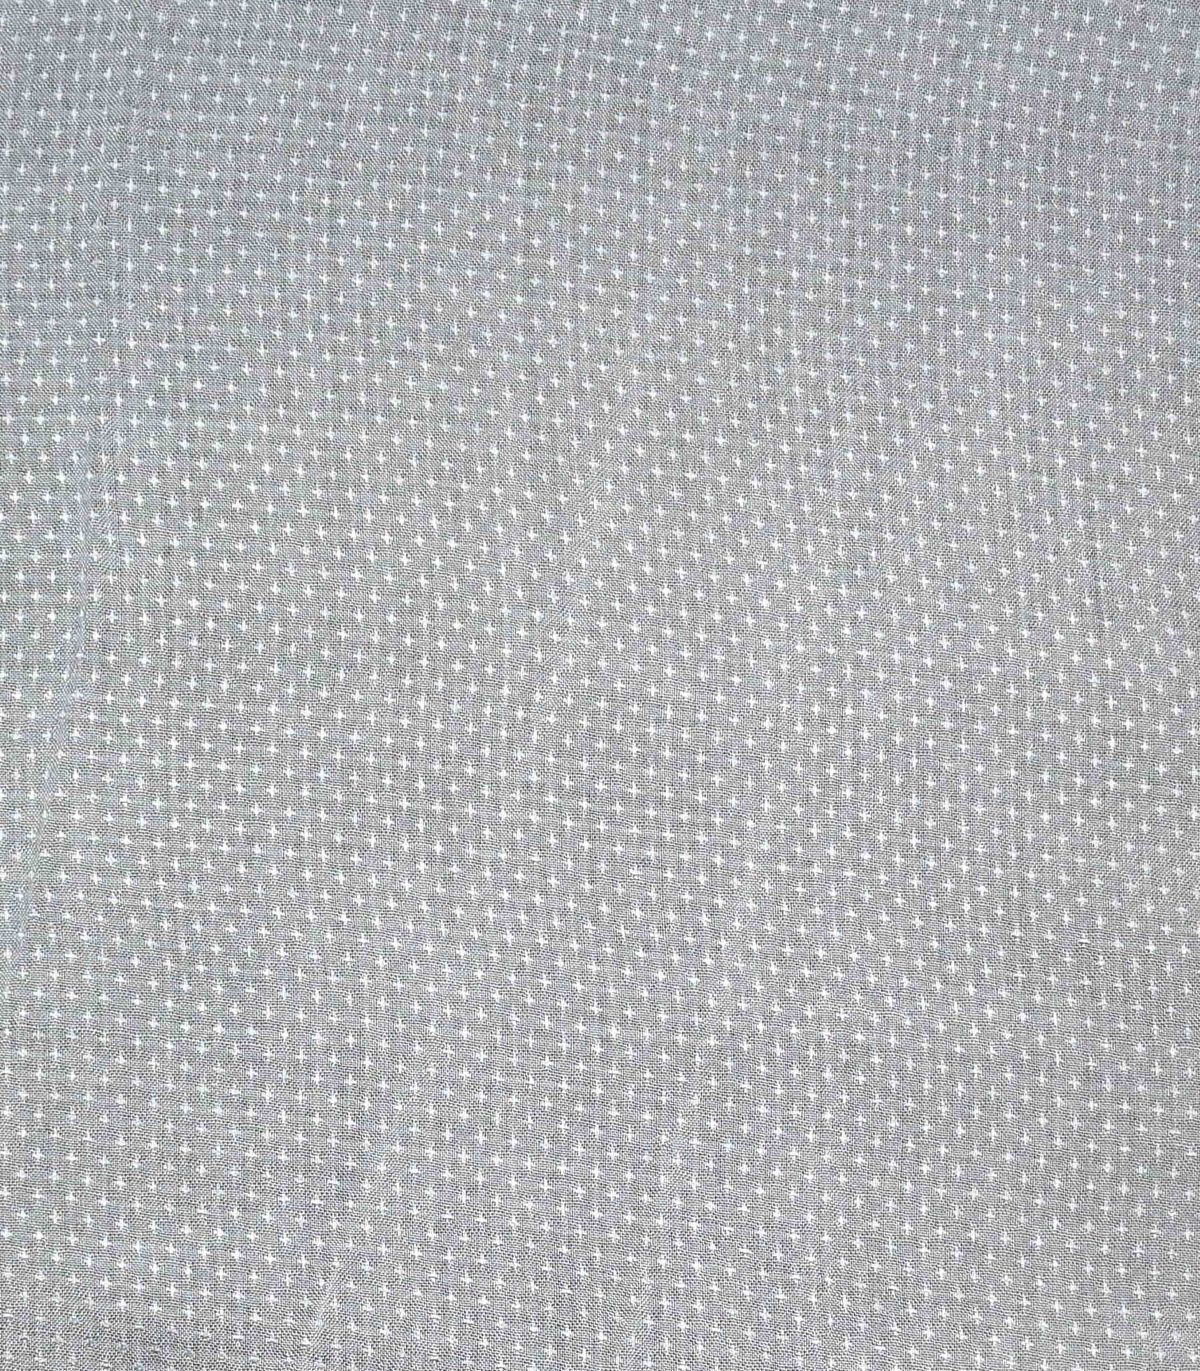 Modal Swissdot RFD Woven Fabric